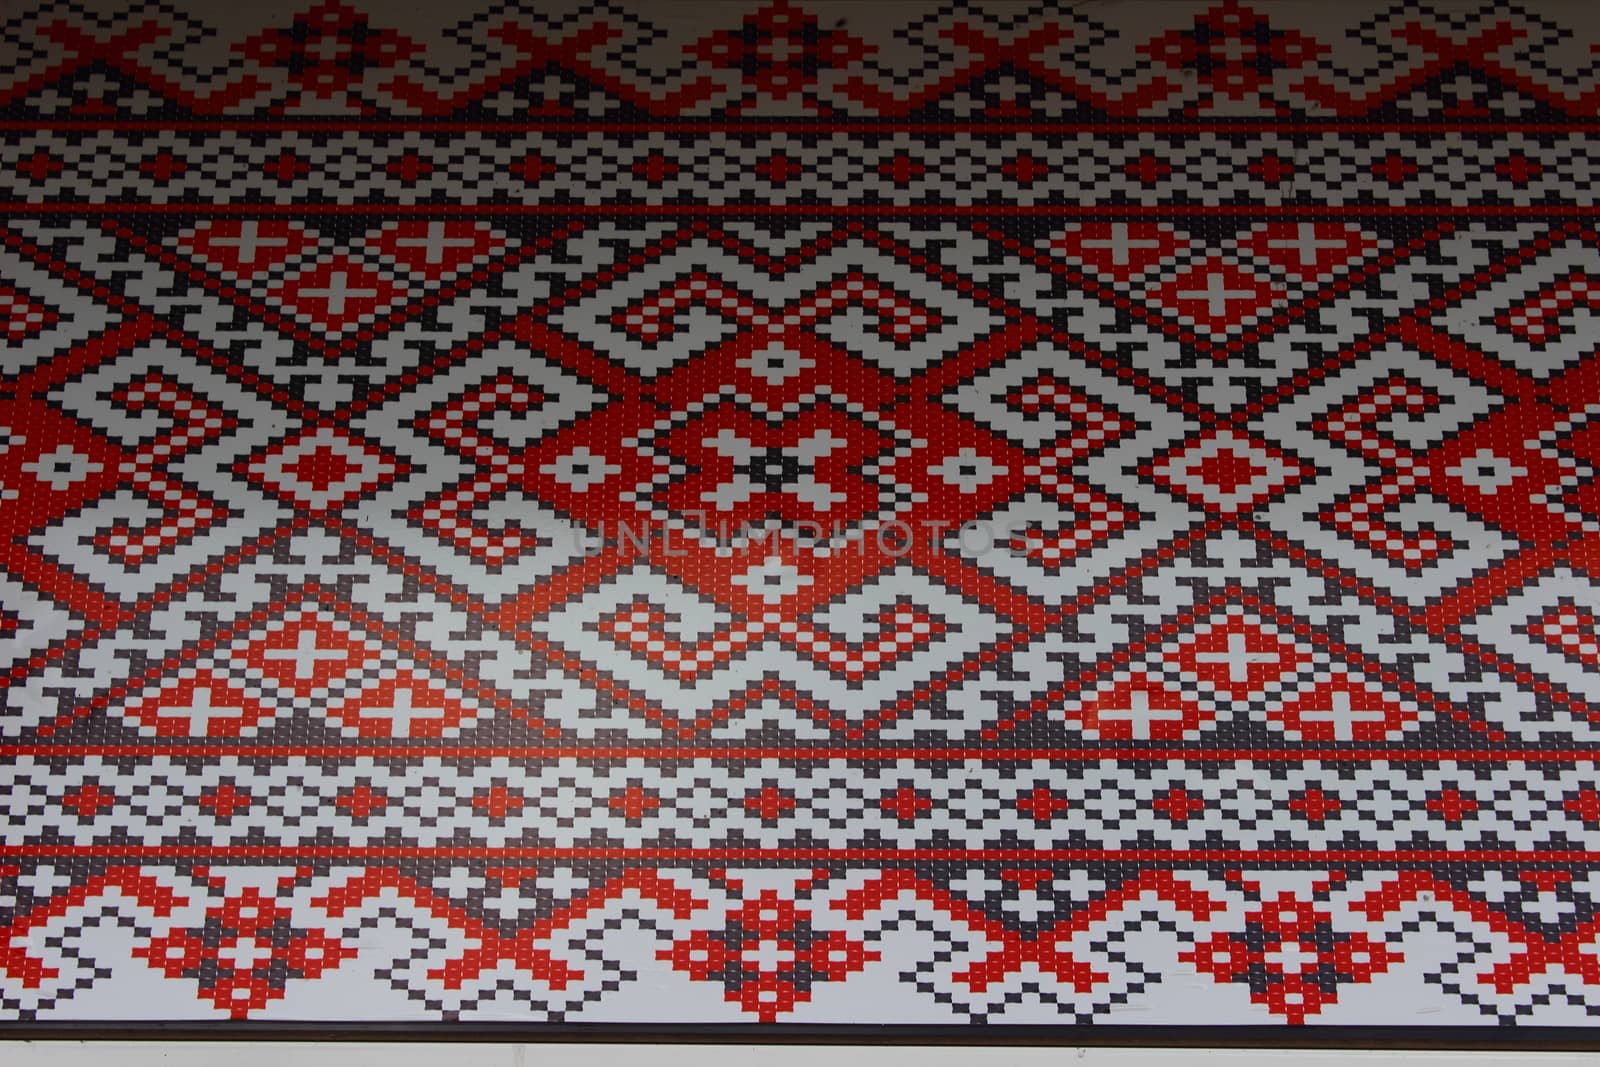 Ukrainian patterns by inesska